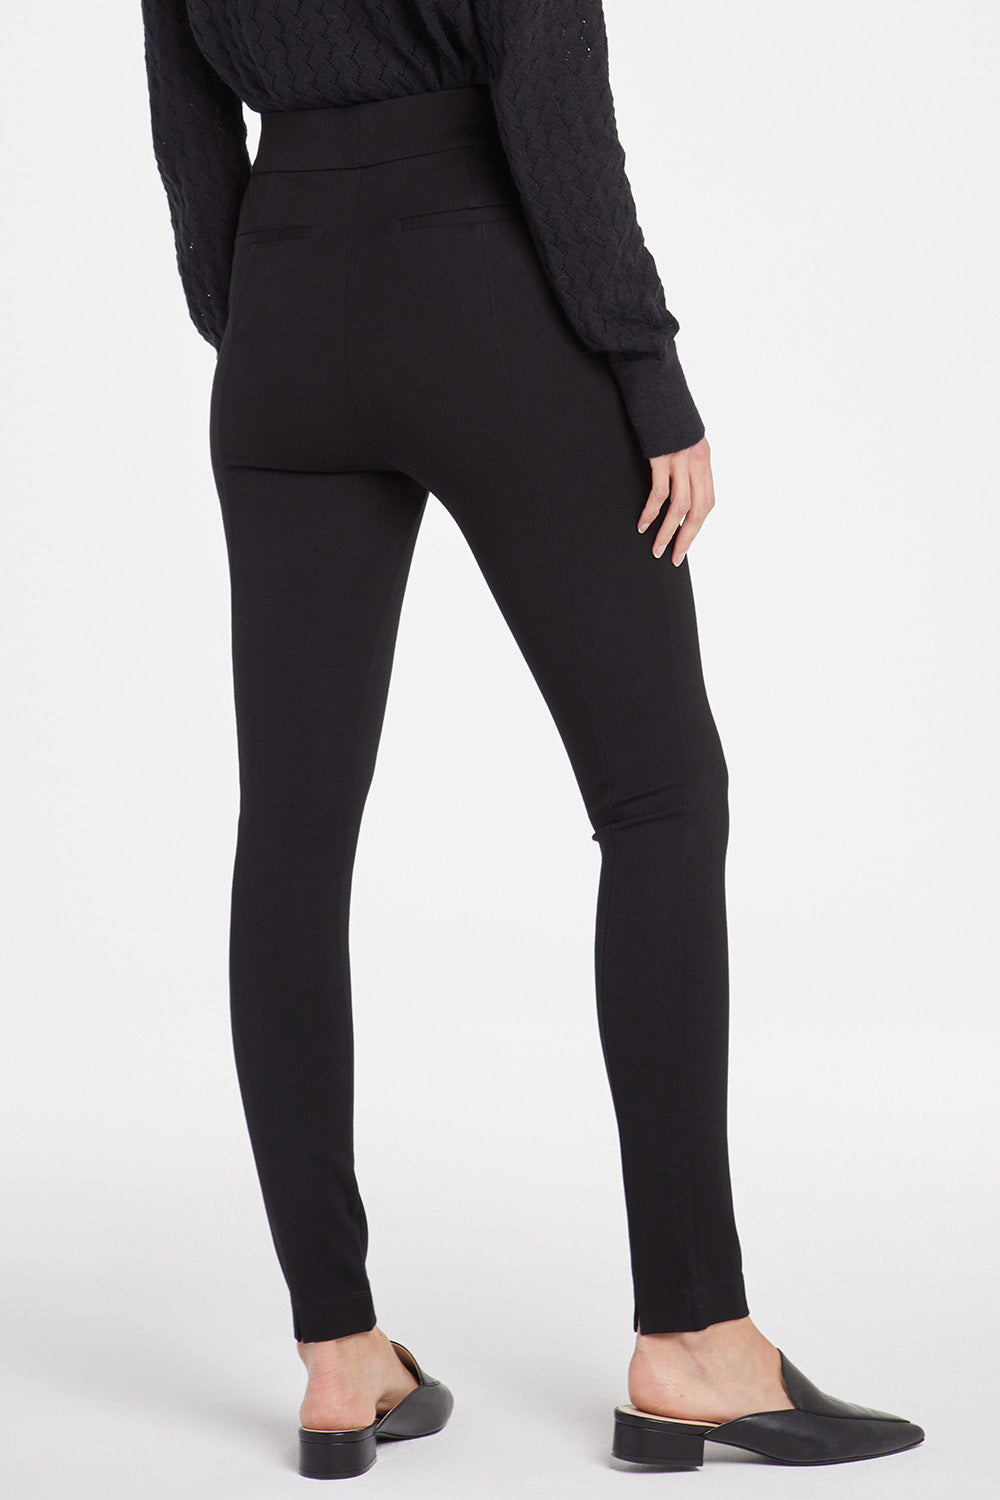 J Jill Ponte Leggings Black Pull On Pants Womens Size XL Ankle Length –  Priordei l'oli de catalunya